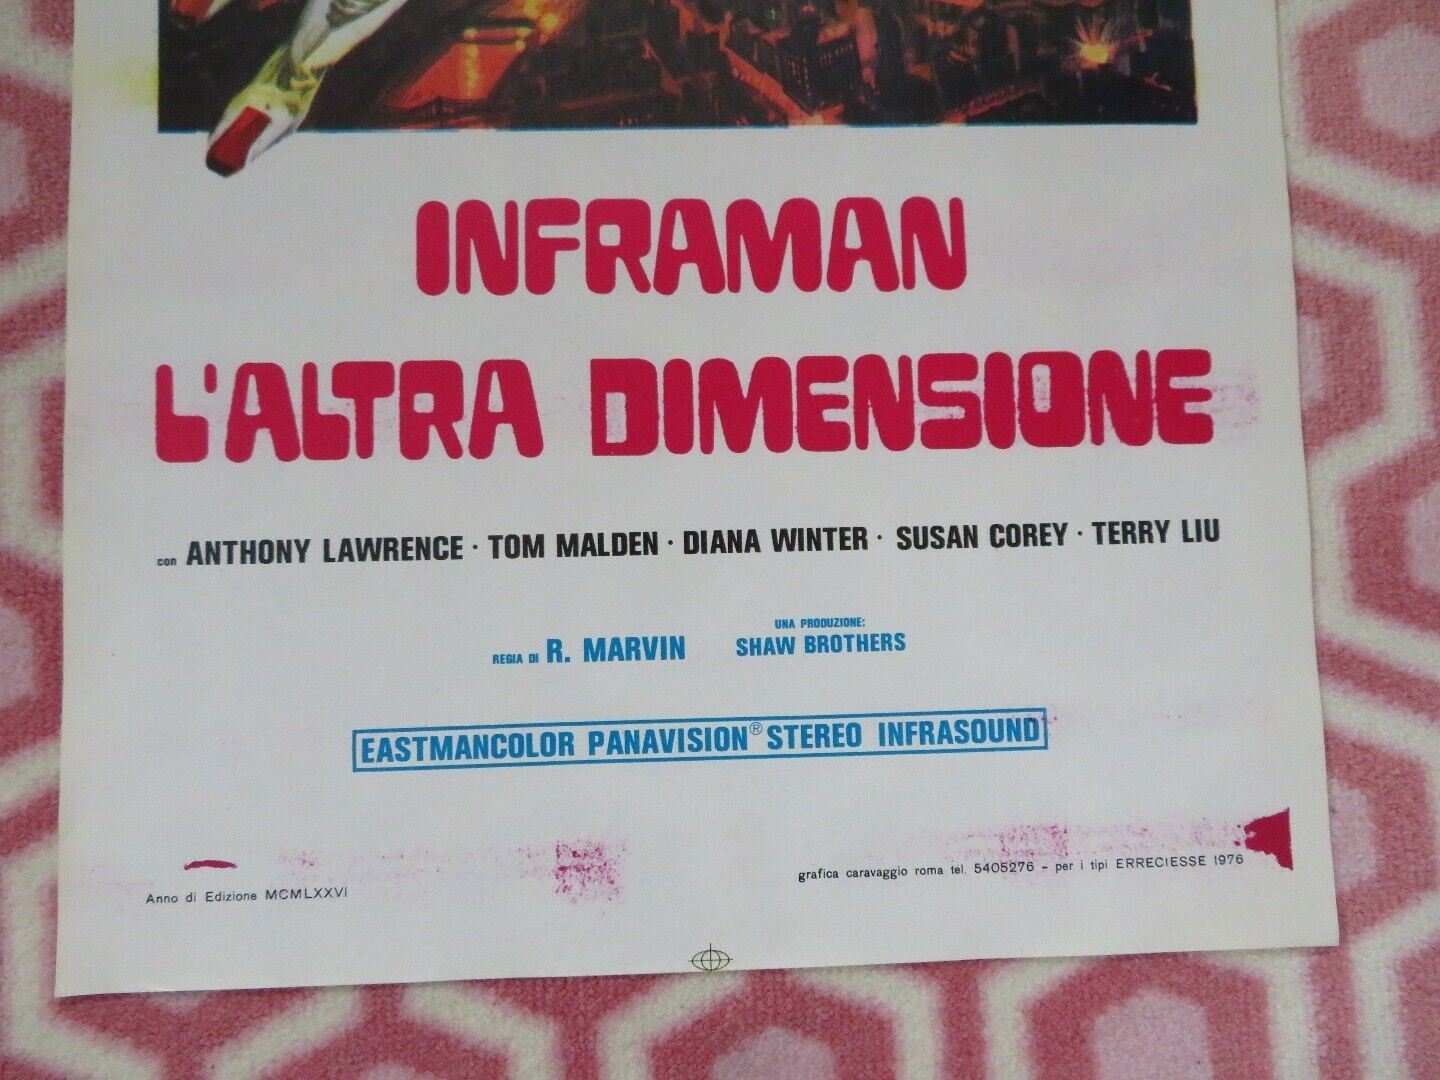 Infra-Man ITALIAN LOCANDINA (27.5"x 13") POSTER SHAW BROTHERS 1976